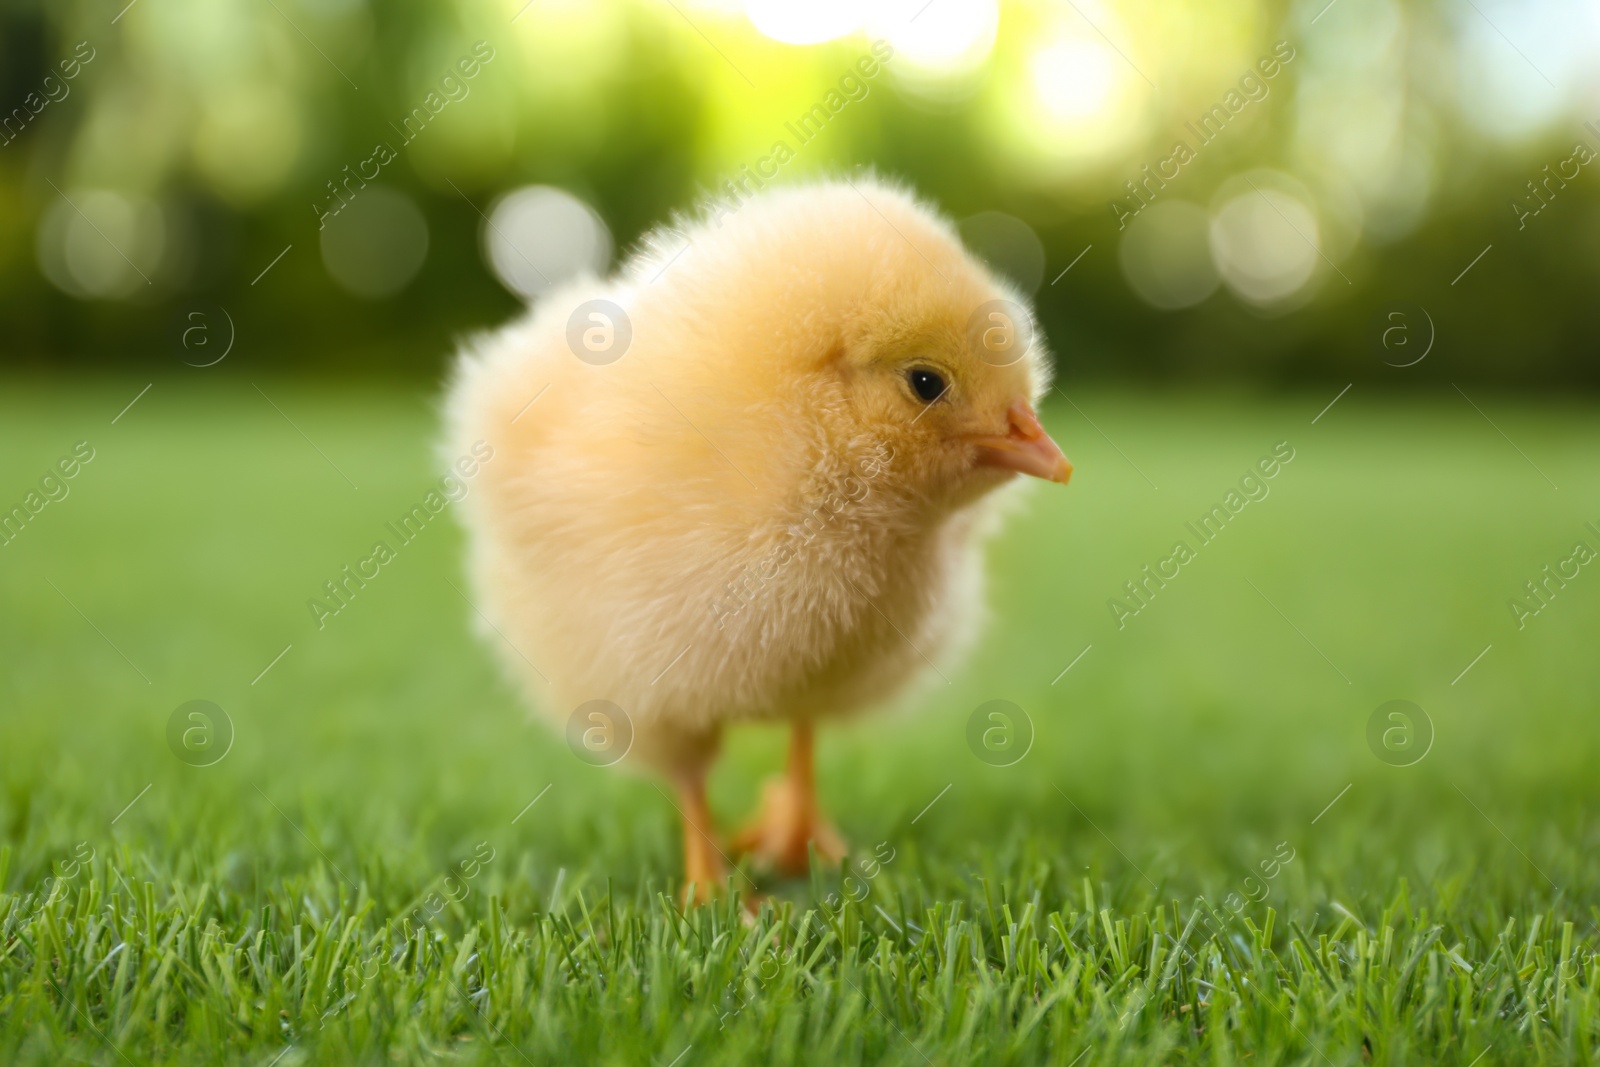 Photo of Cute fluffy baby chicken on green grass outdoors, closeup